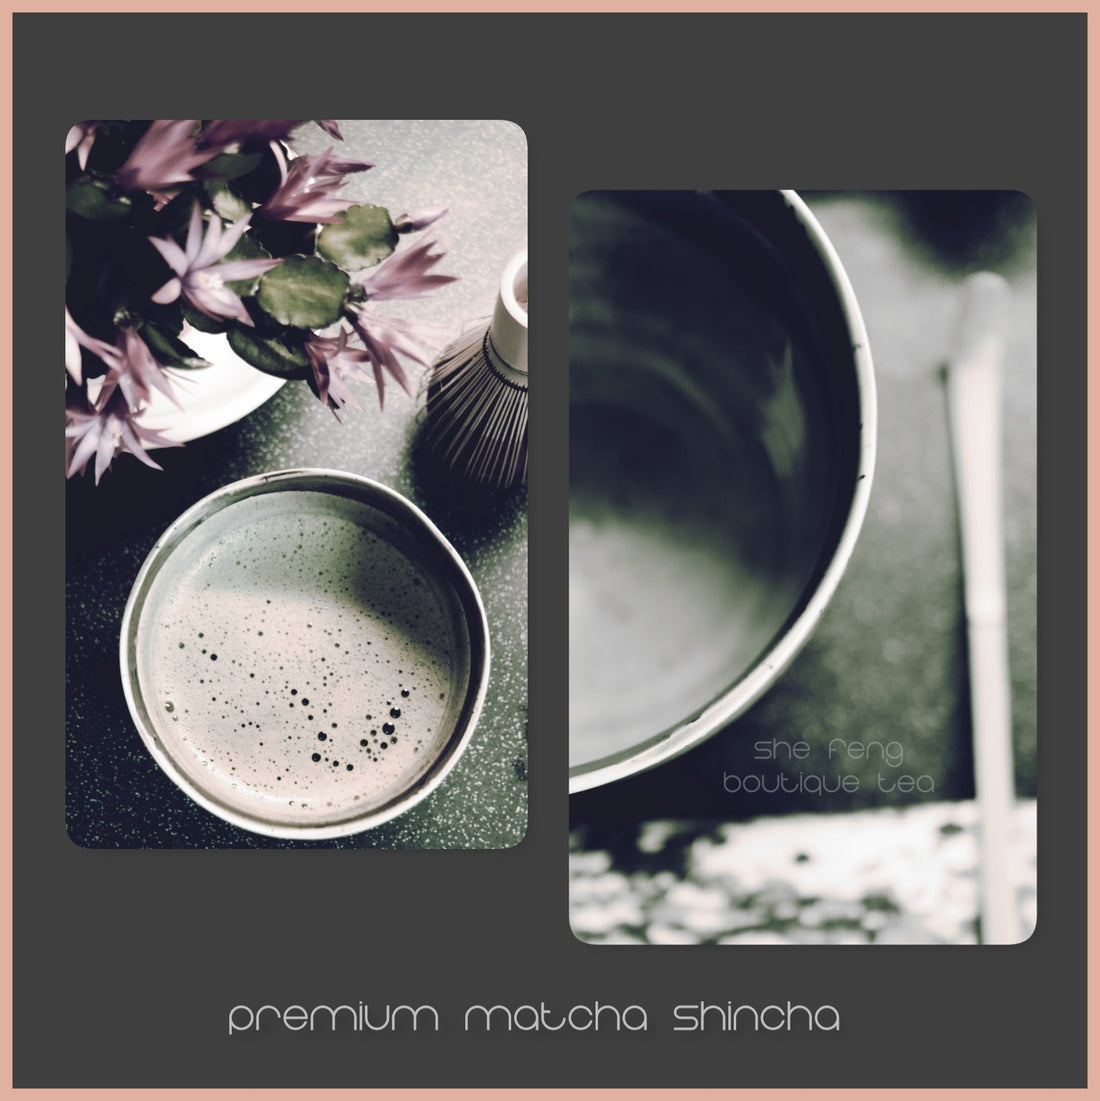 Tasting Notes – Premium Matcha Shincha - She Fang Boutique Tea